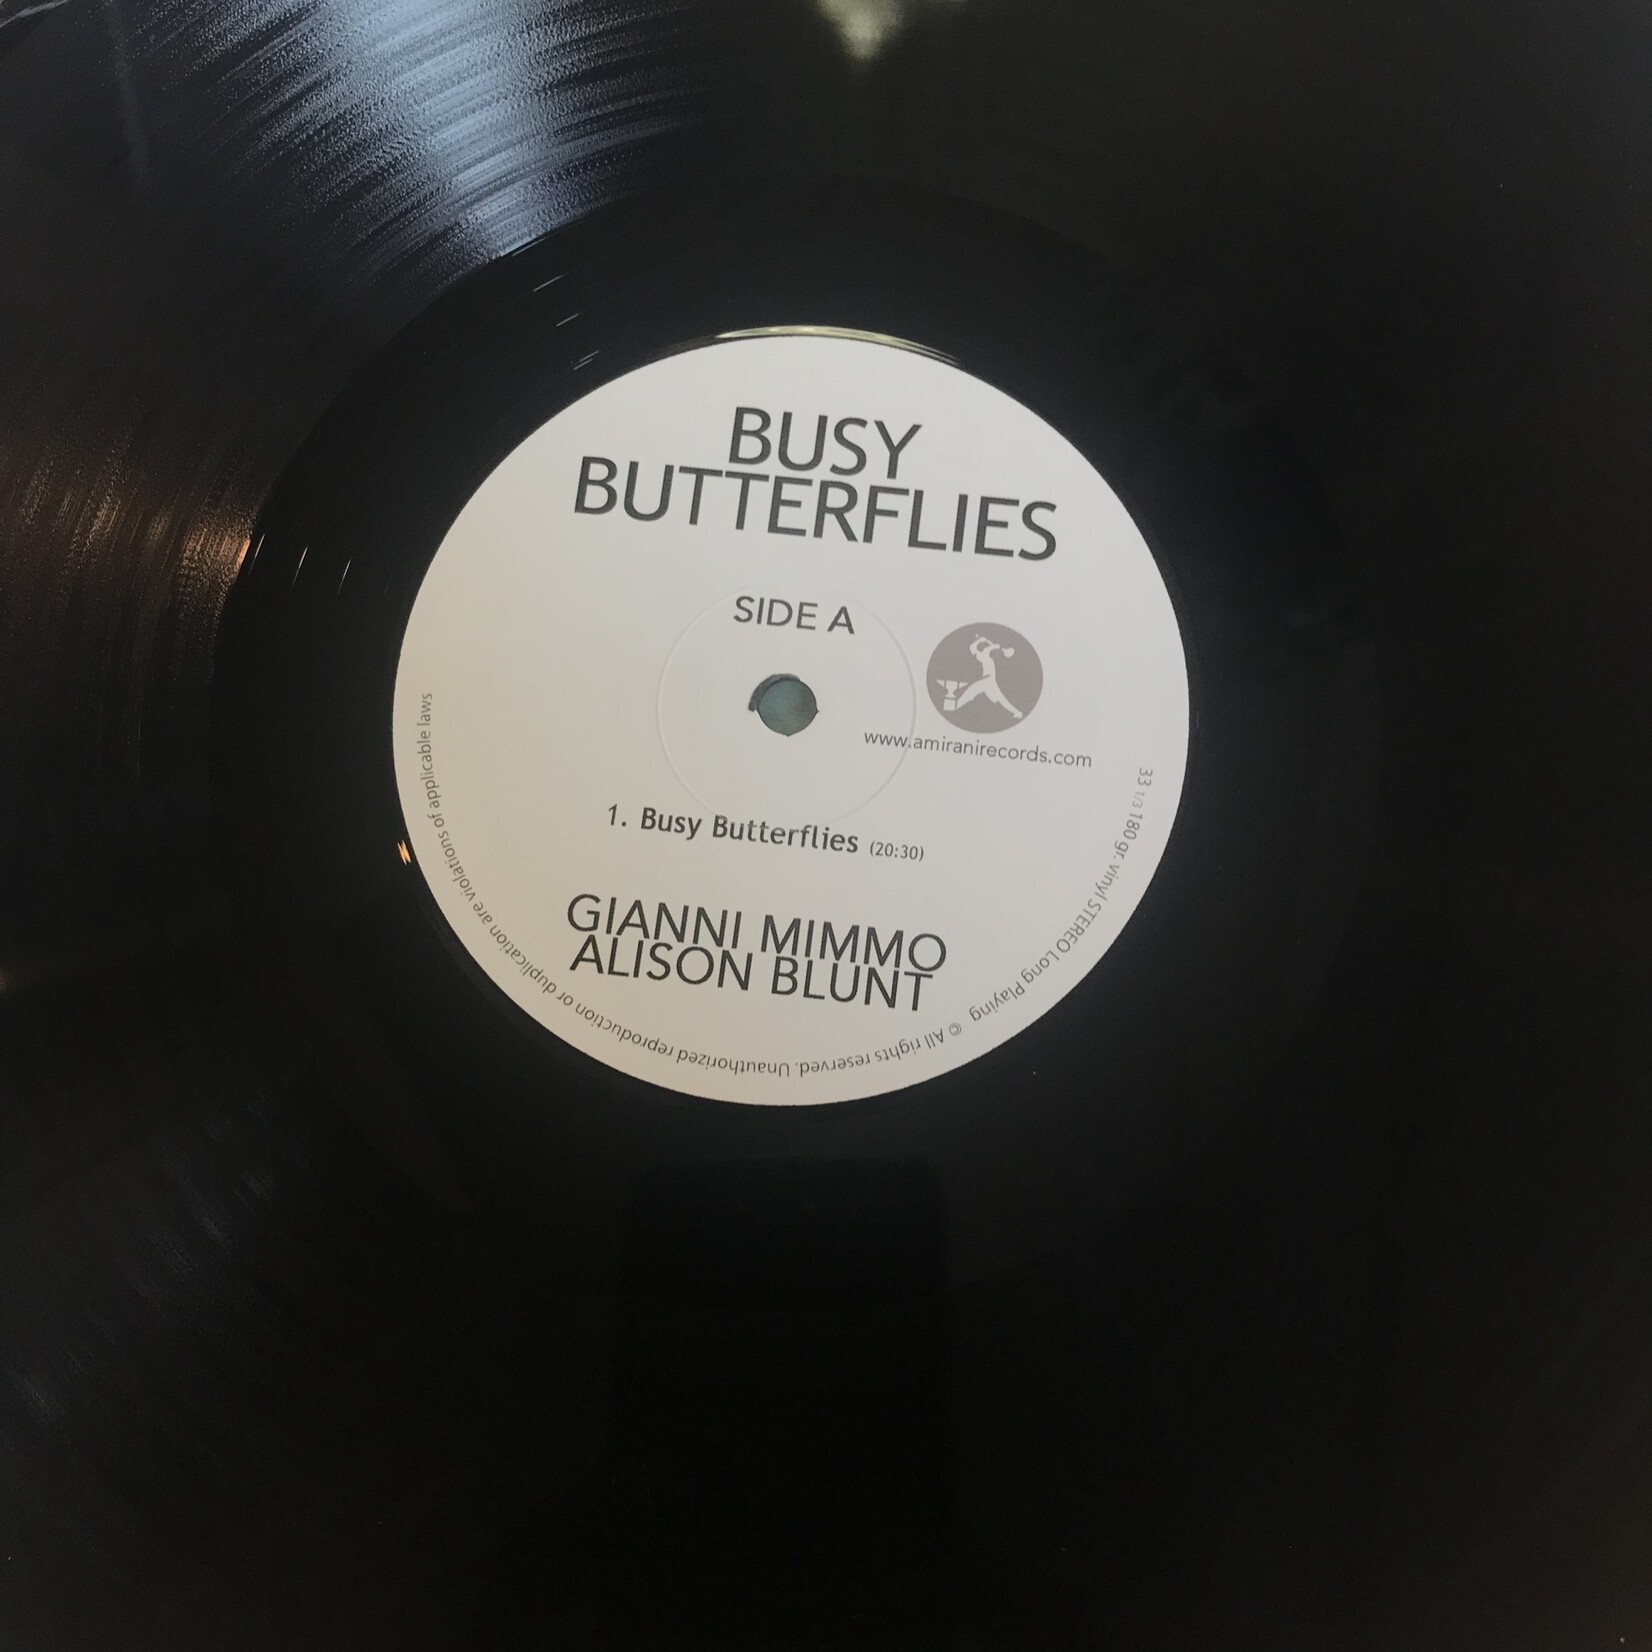 Gianno Mimmo, Alison Blunt - Busy Butterflies - AMRN 062 - Vinyl LP (USED)